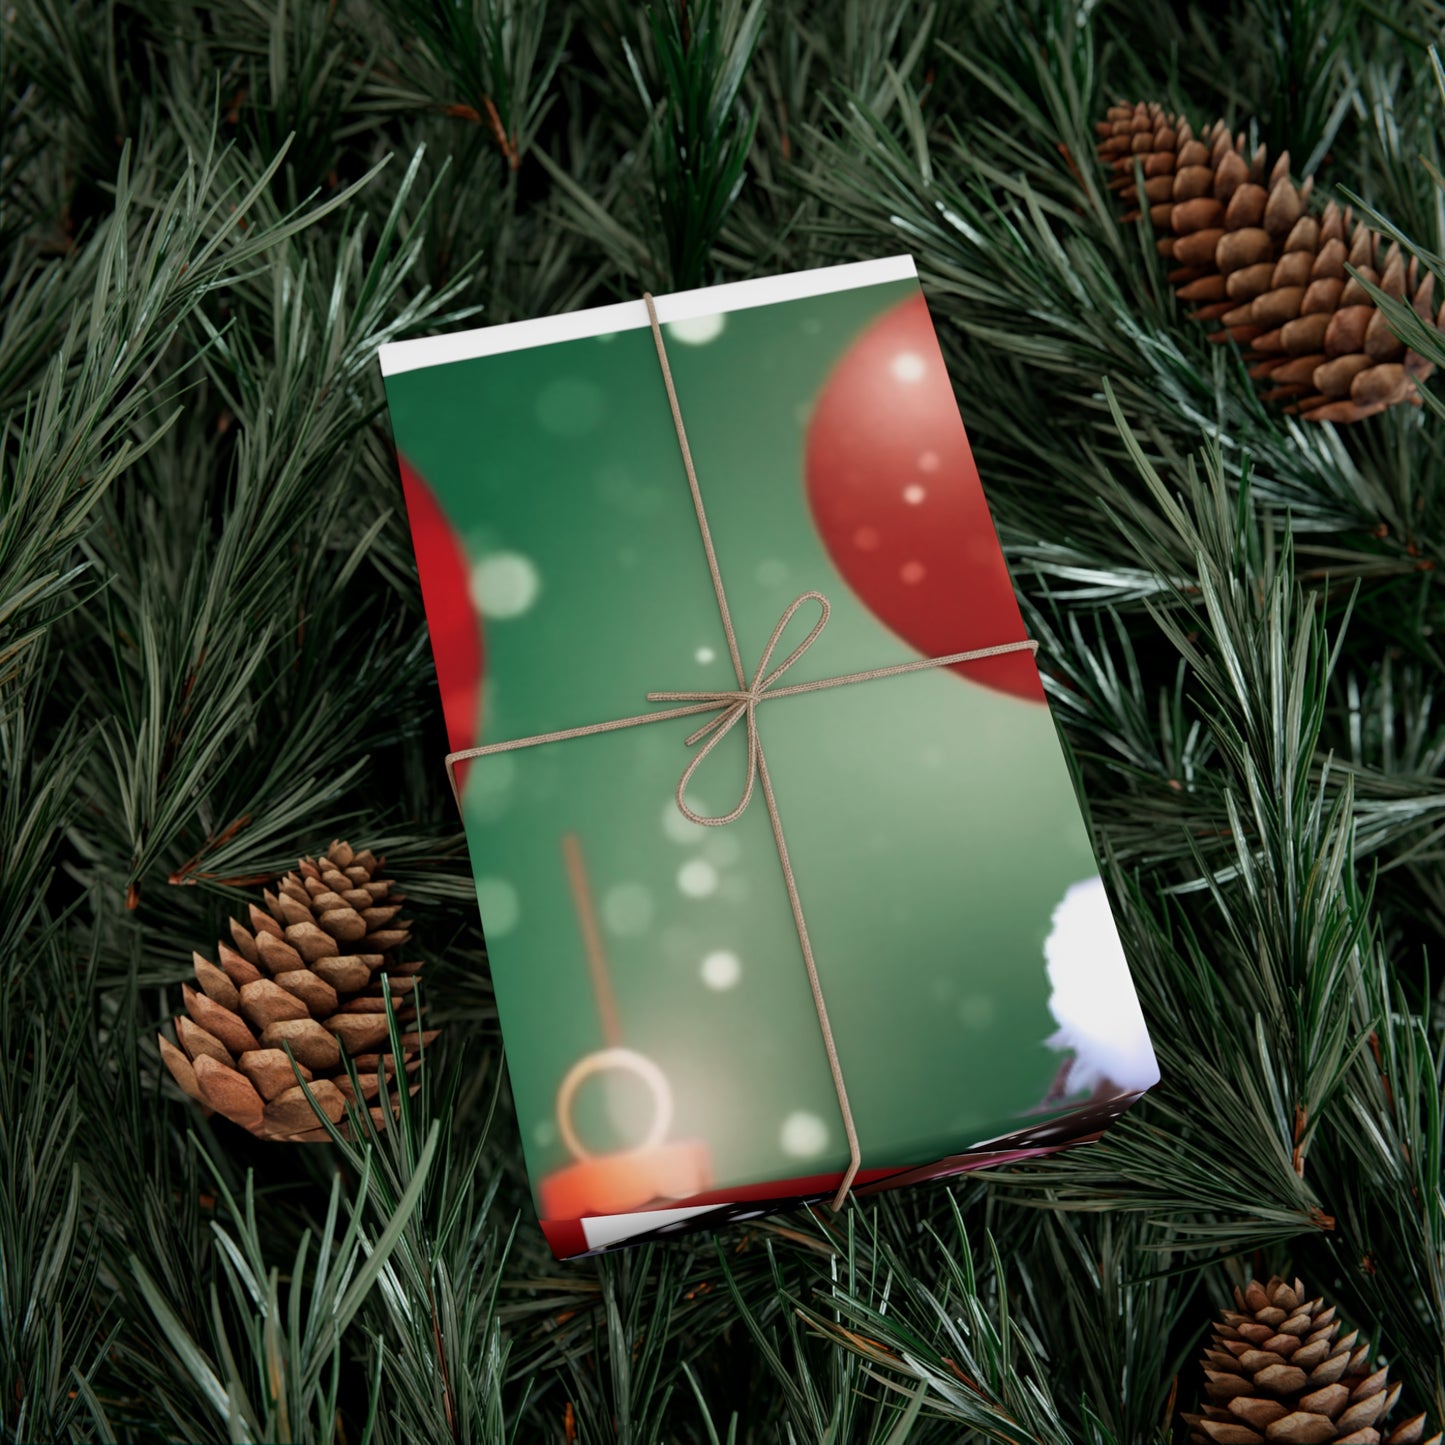 LIL Elf Gift Wrap: